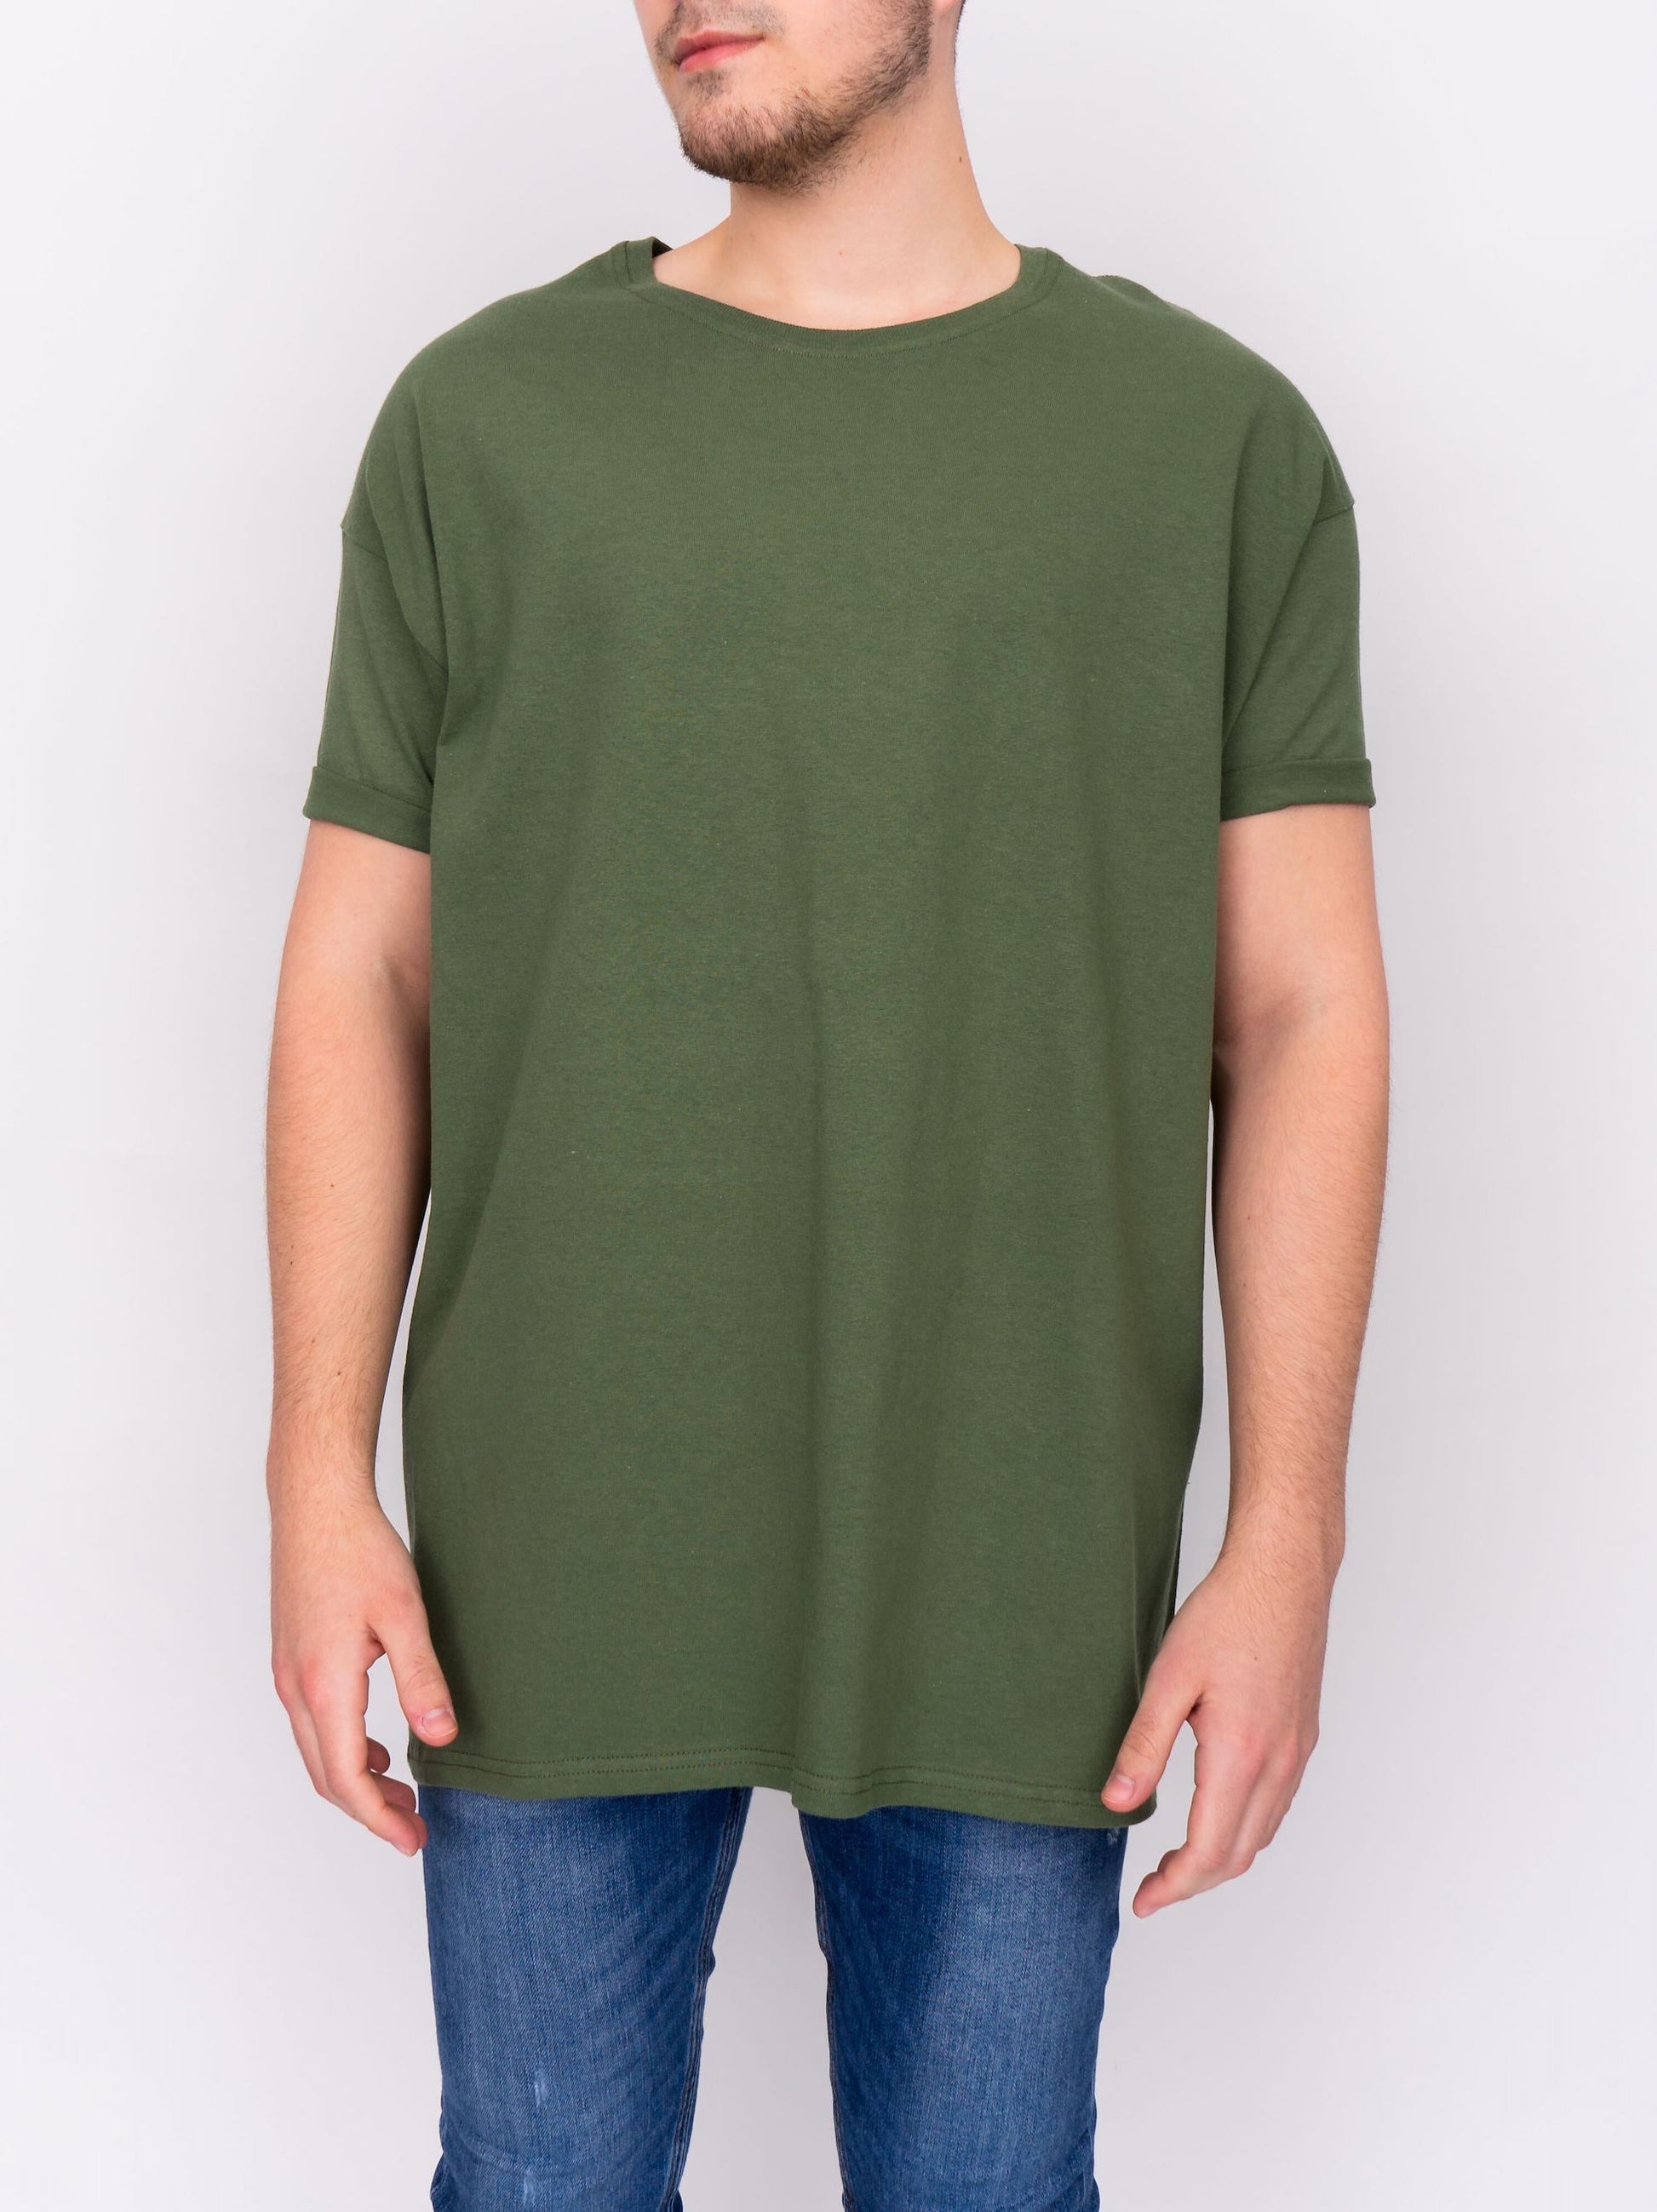 Oversize T-Shirt - Military Green - DEEP Clothing